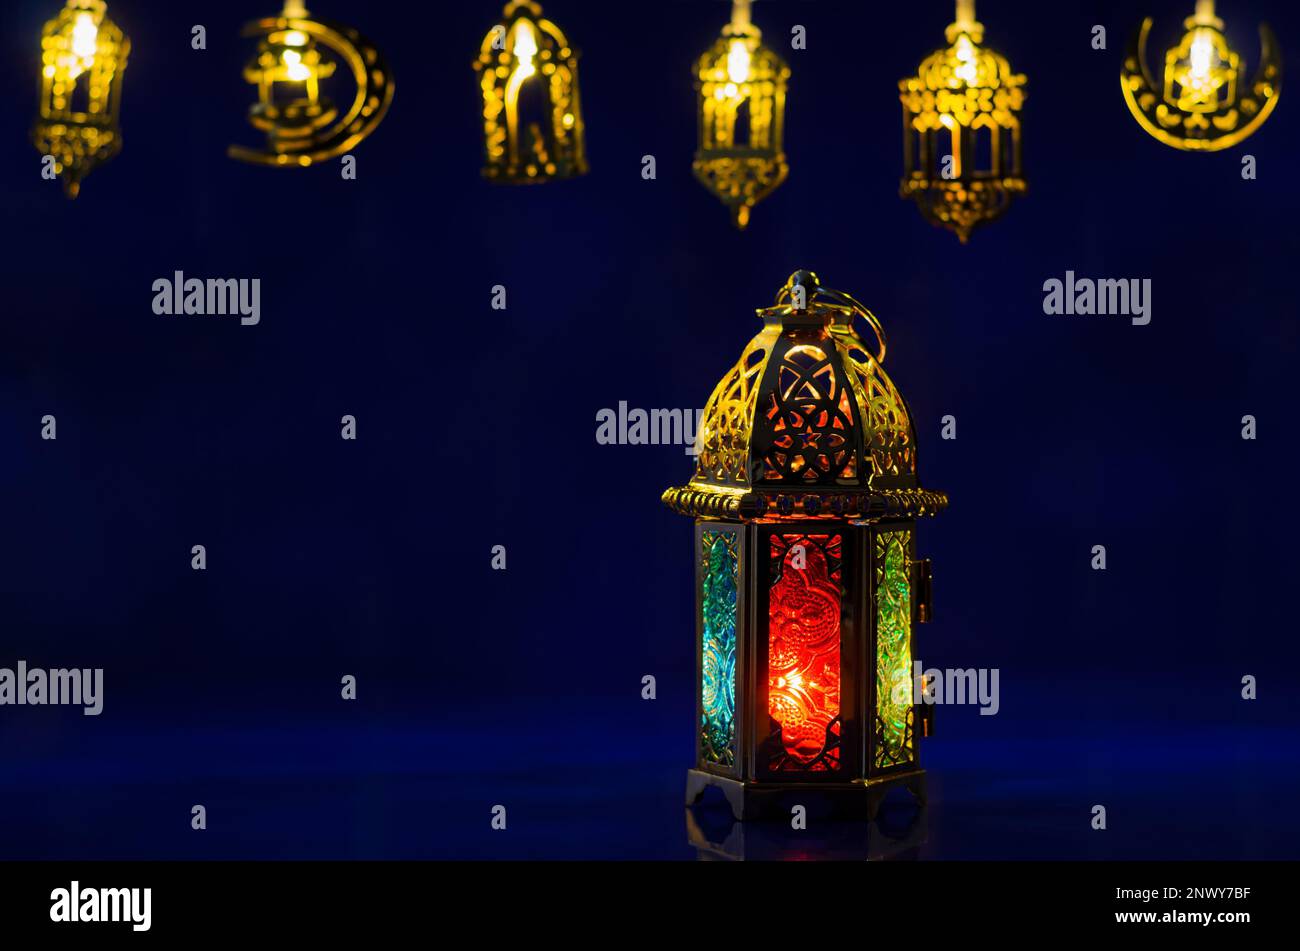 Golden lantern puts on dark blue background with decorated lights